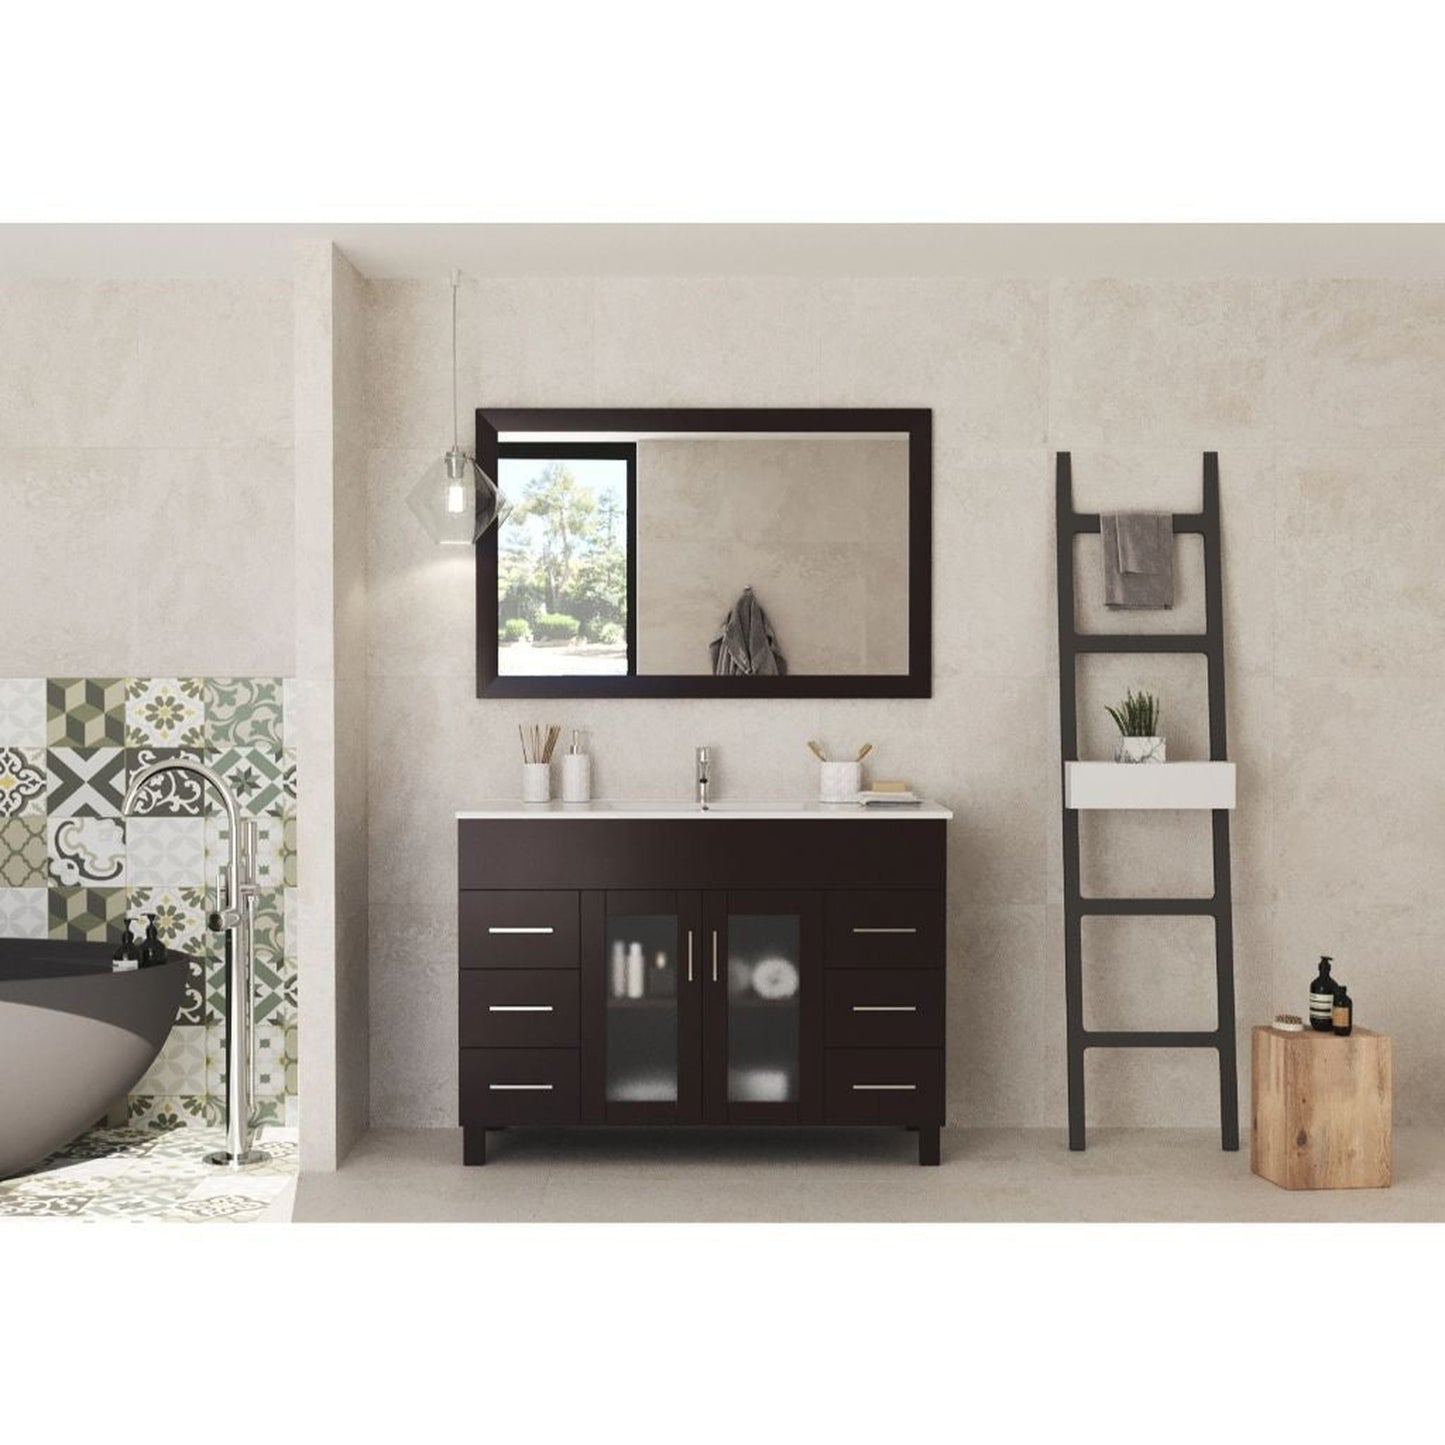 Laviva Nova 48" Brown Vanity Base and White Countertop With Ceramic Sink